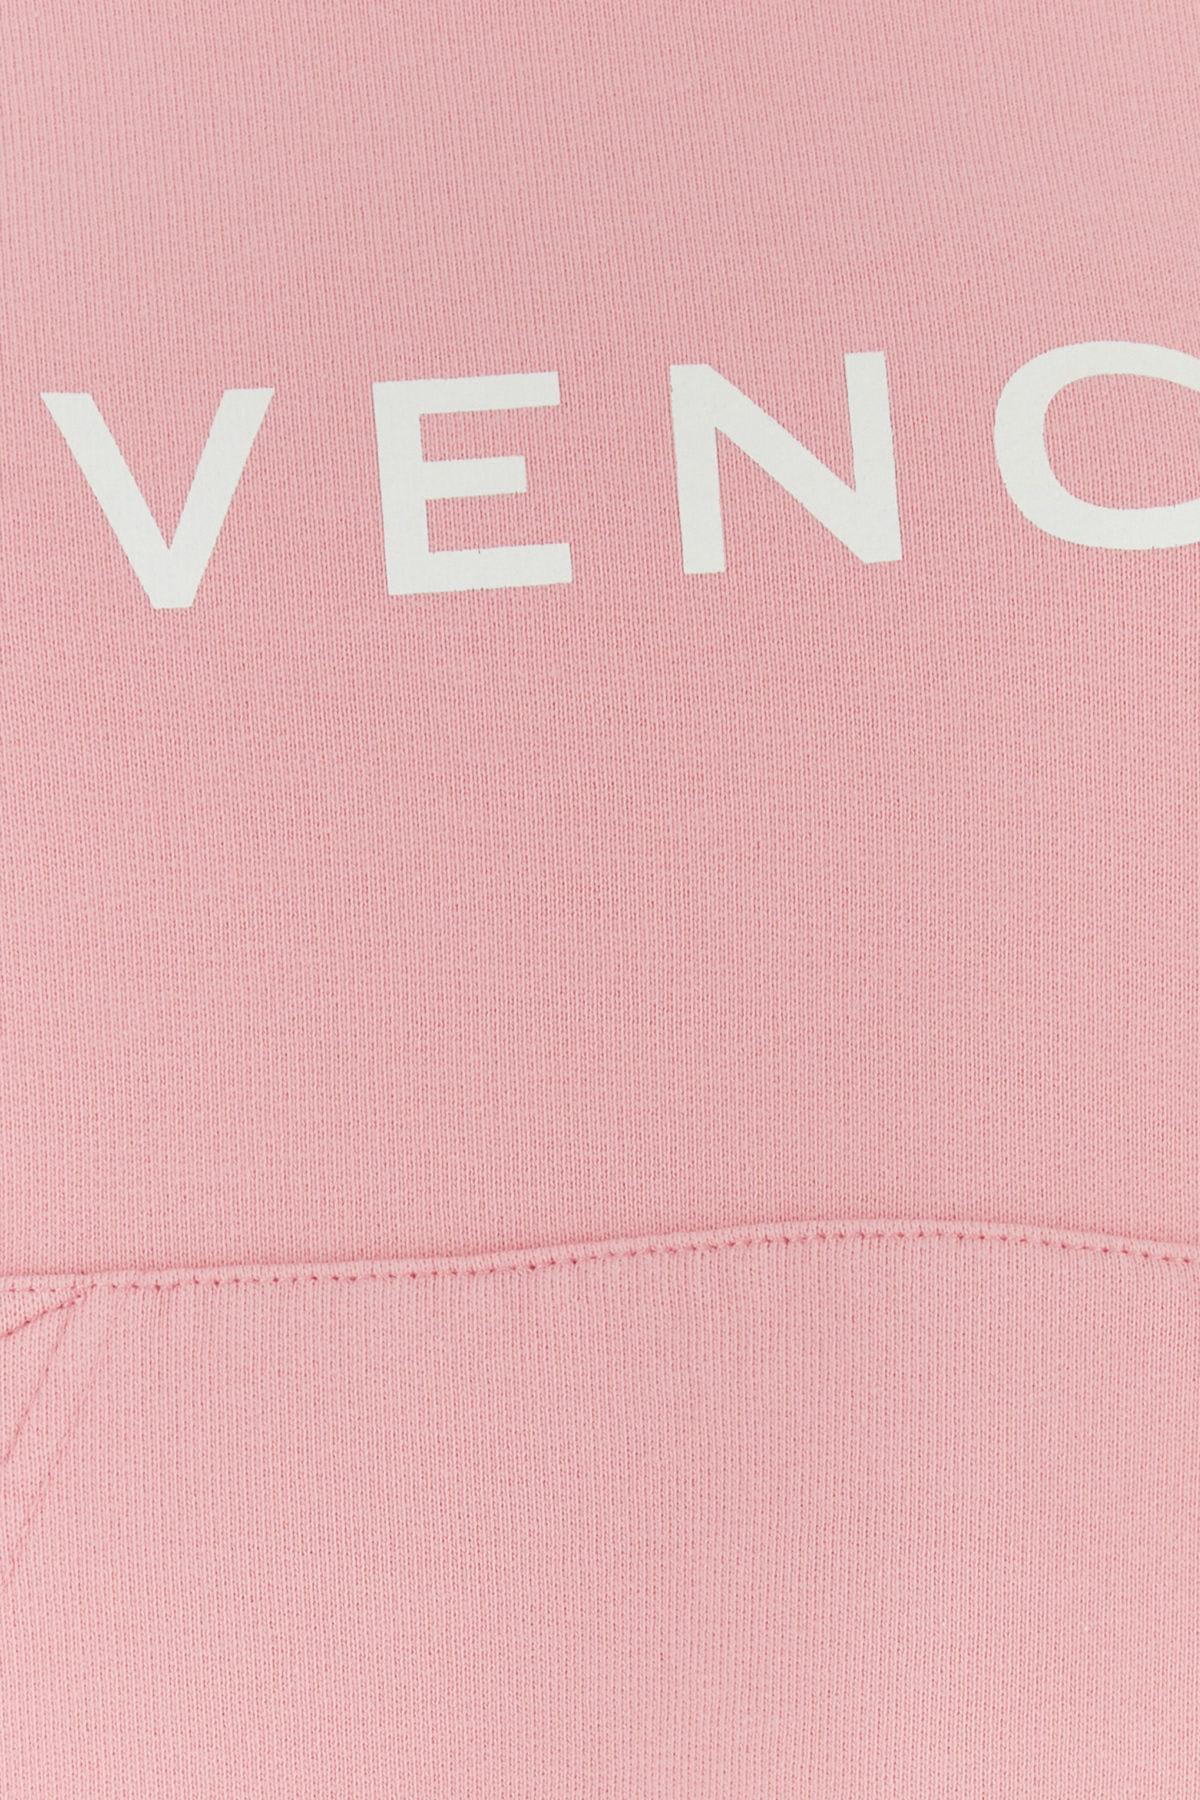 Shop Givenchy Pink Cotton Sweatshirt